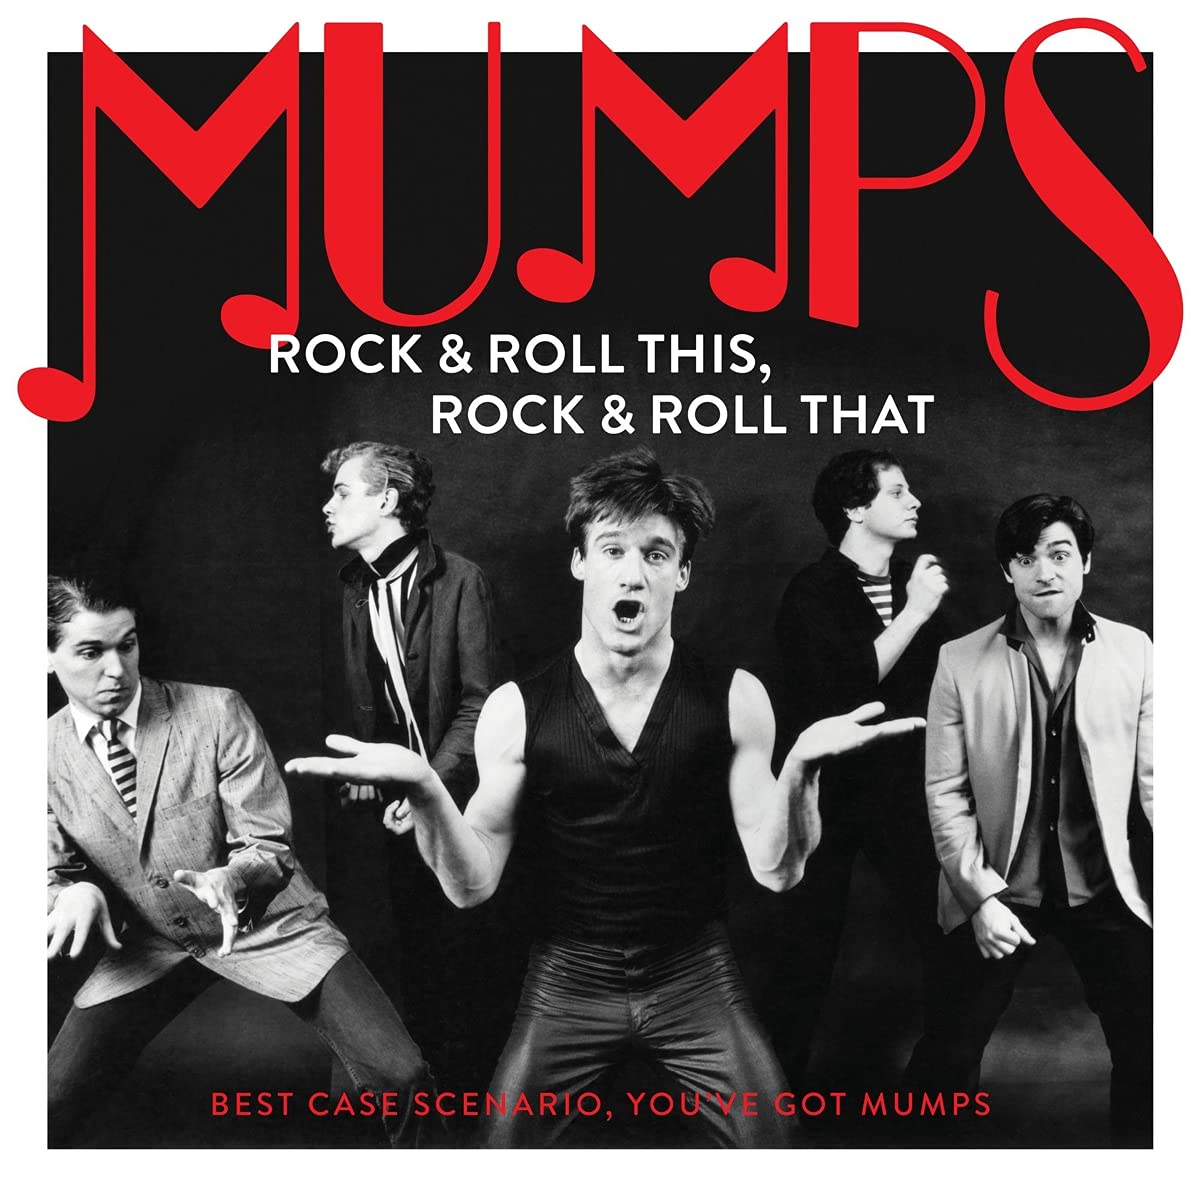 The Mumps - Rock & Roll This, Rock & Roll That: Best Case Scenario You've Got Bumps